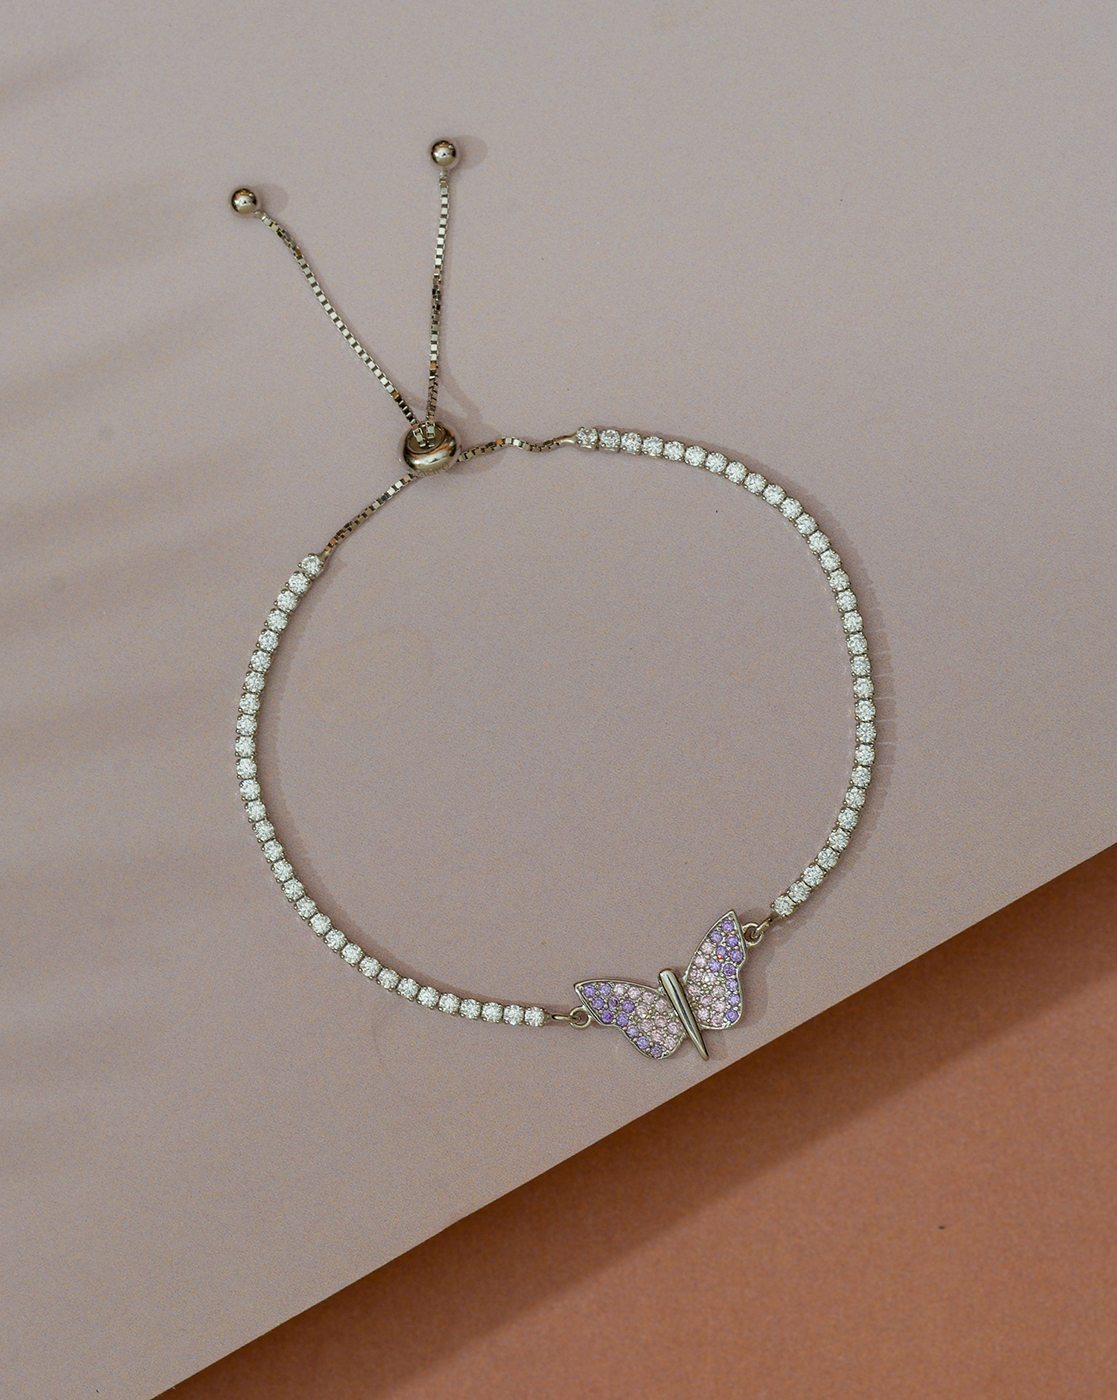 Ornate Jewels Bangle Bracelets And Cuffs : Buy 925 Sterling Silver American  Diamond Adjustable Butterfly Bracelet for Women Girls Free Size  Online